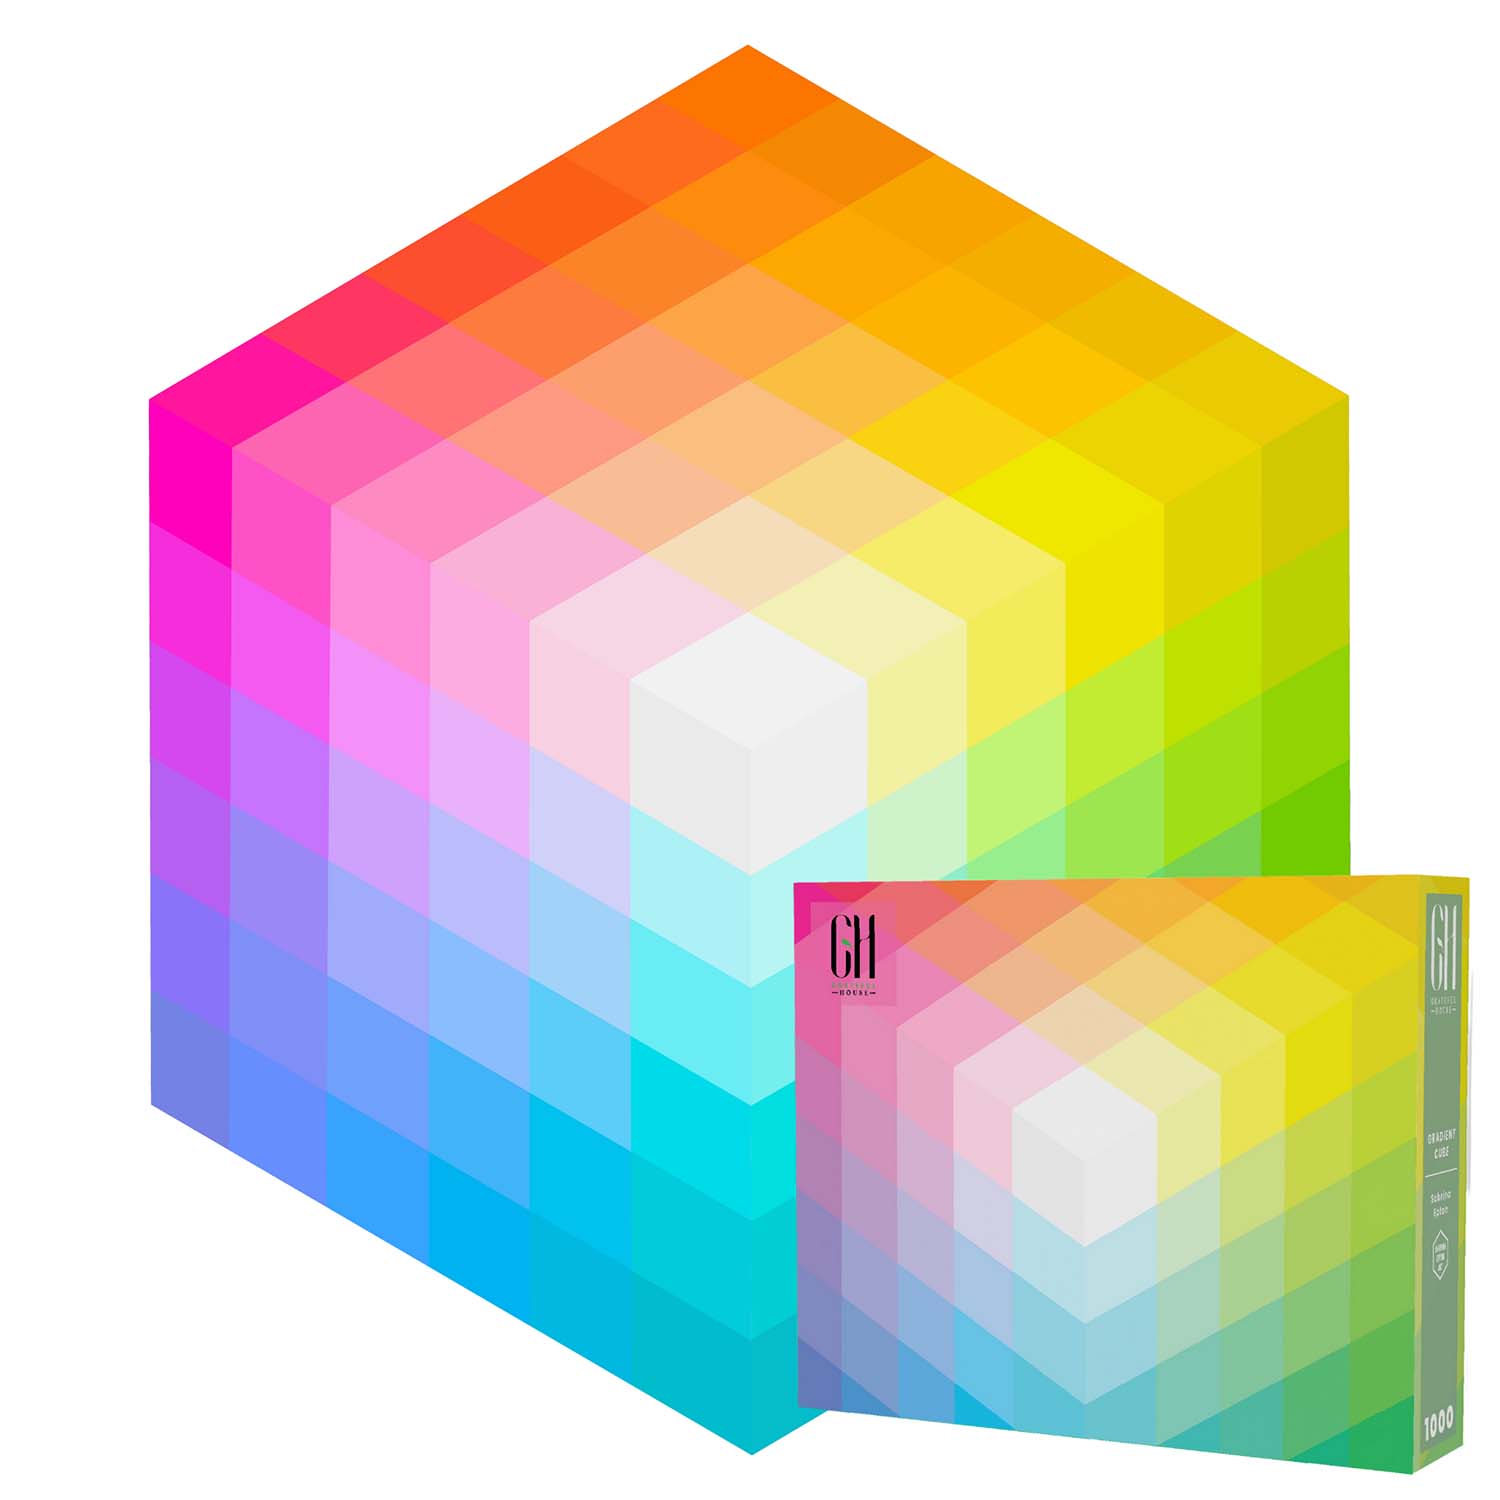 Gradient Cube by Sabrina Epton Rainbow & Gradient Jigsaw Puzzle